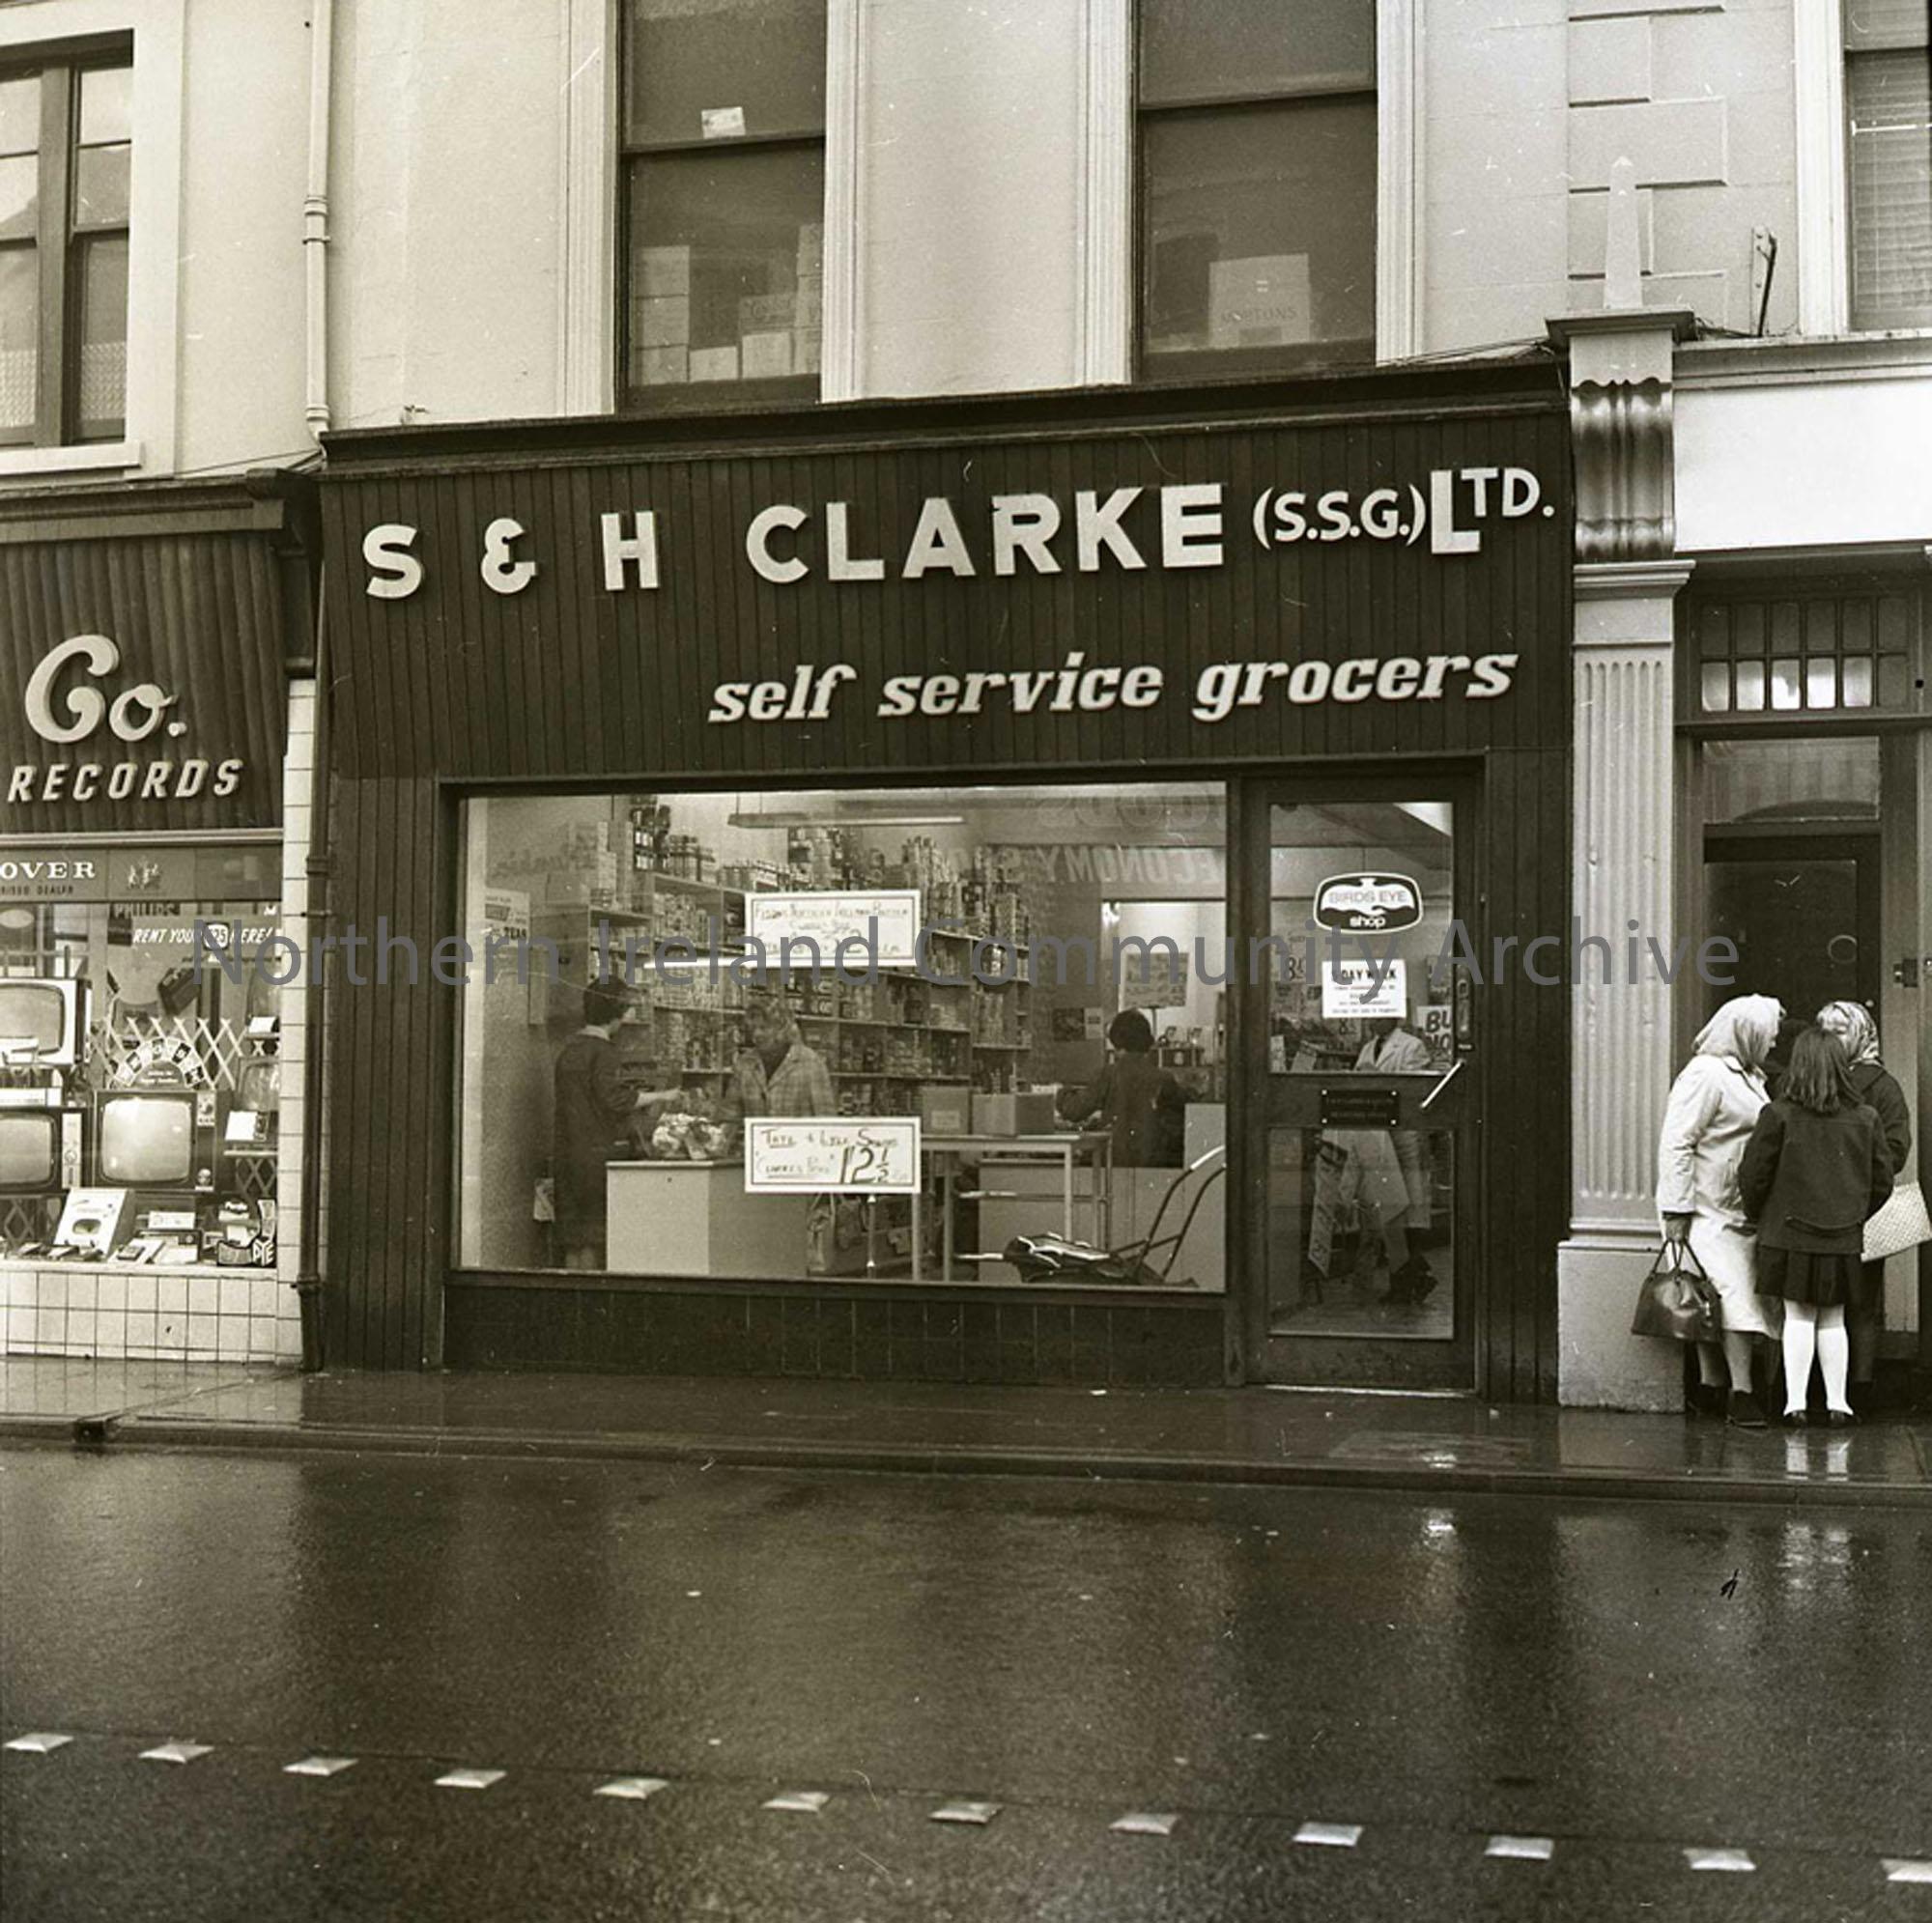 S & H Clarke Ltd.